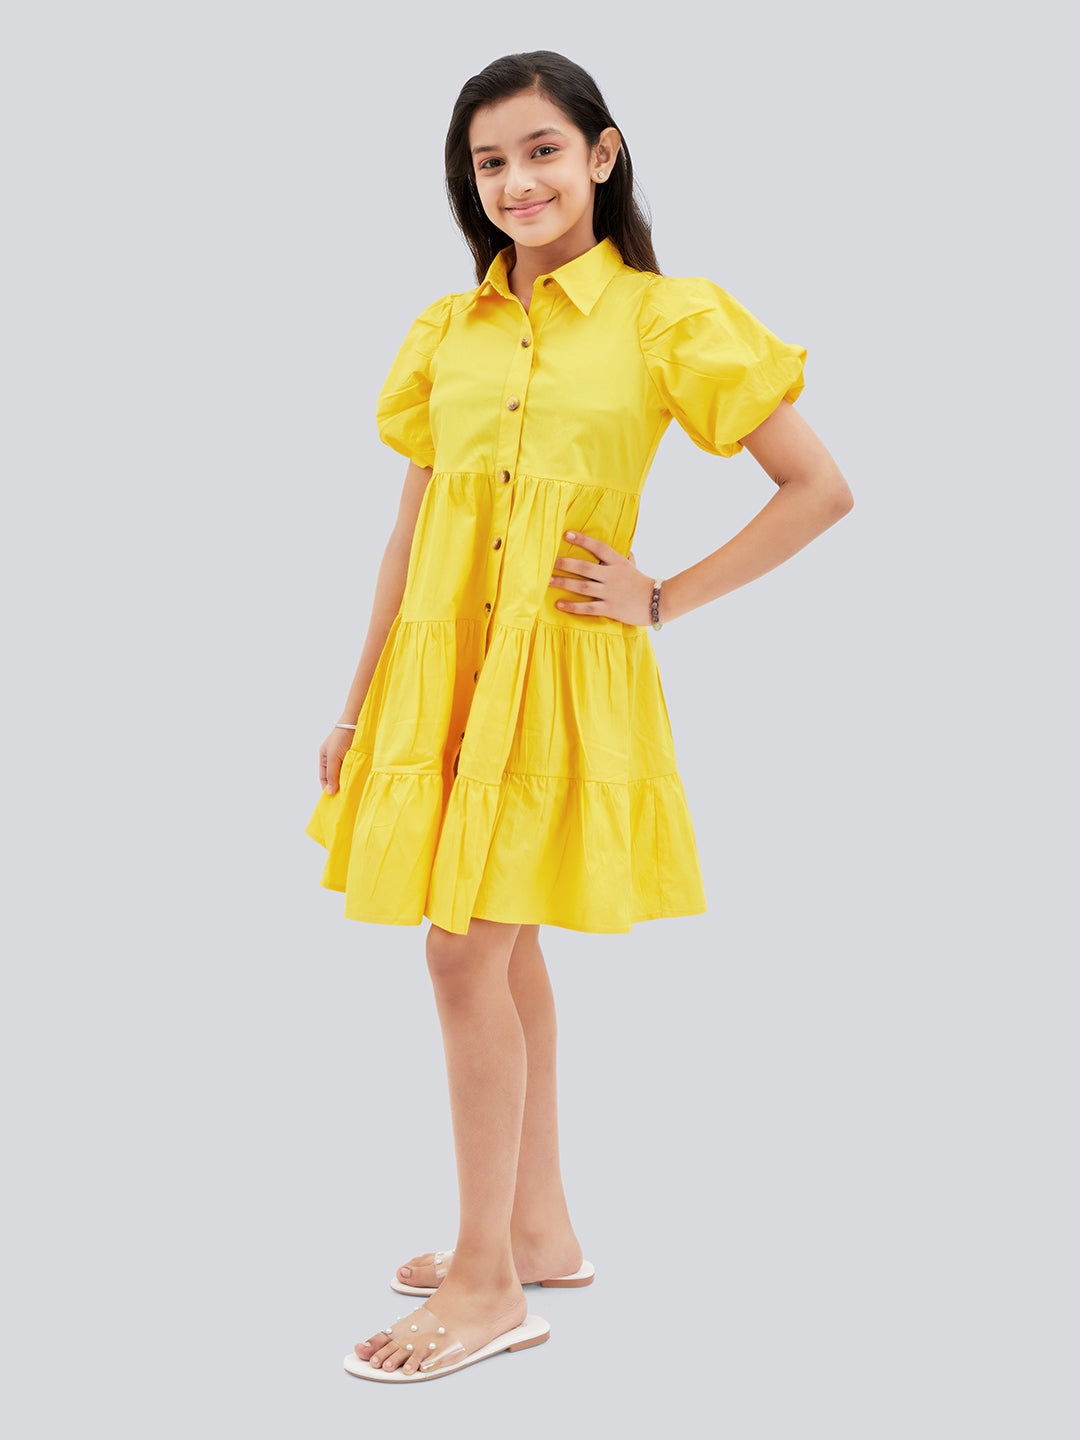 Olele® Lucy Shirt Dress - Turmeric Yellow